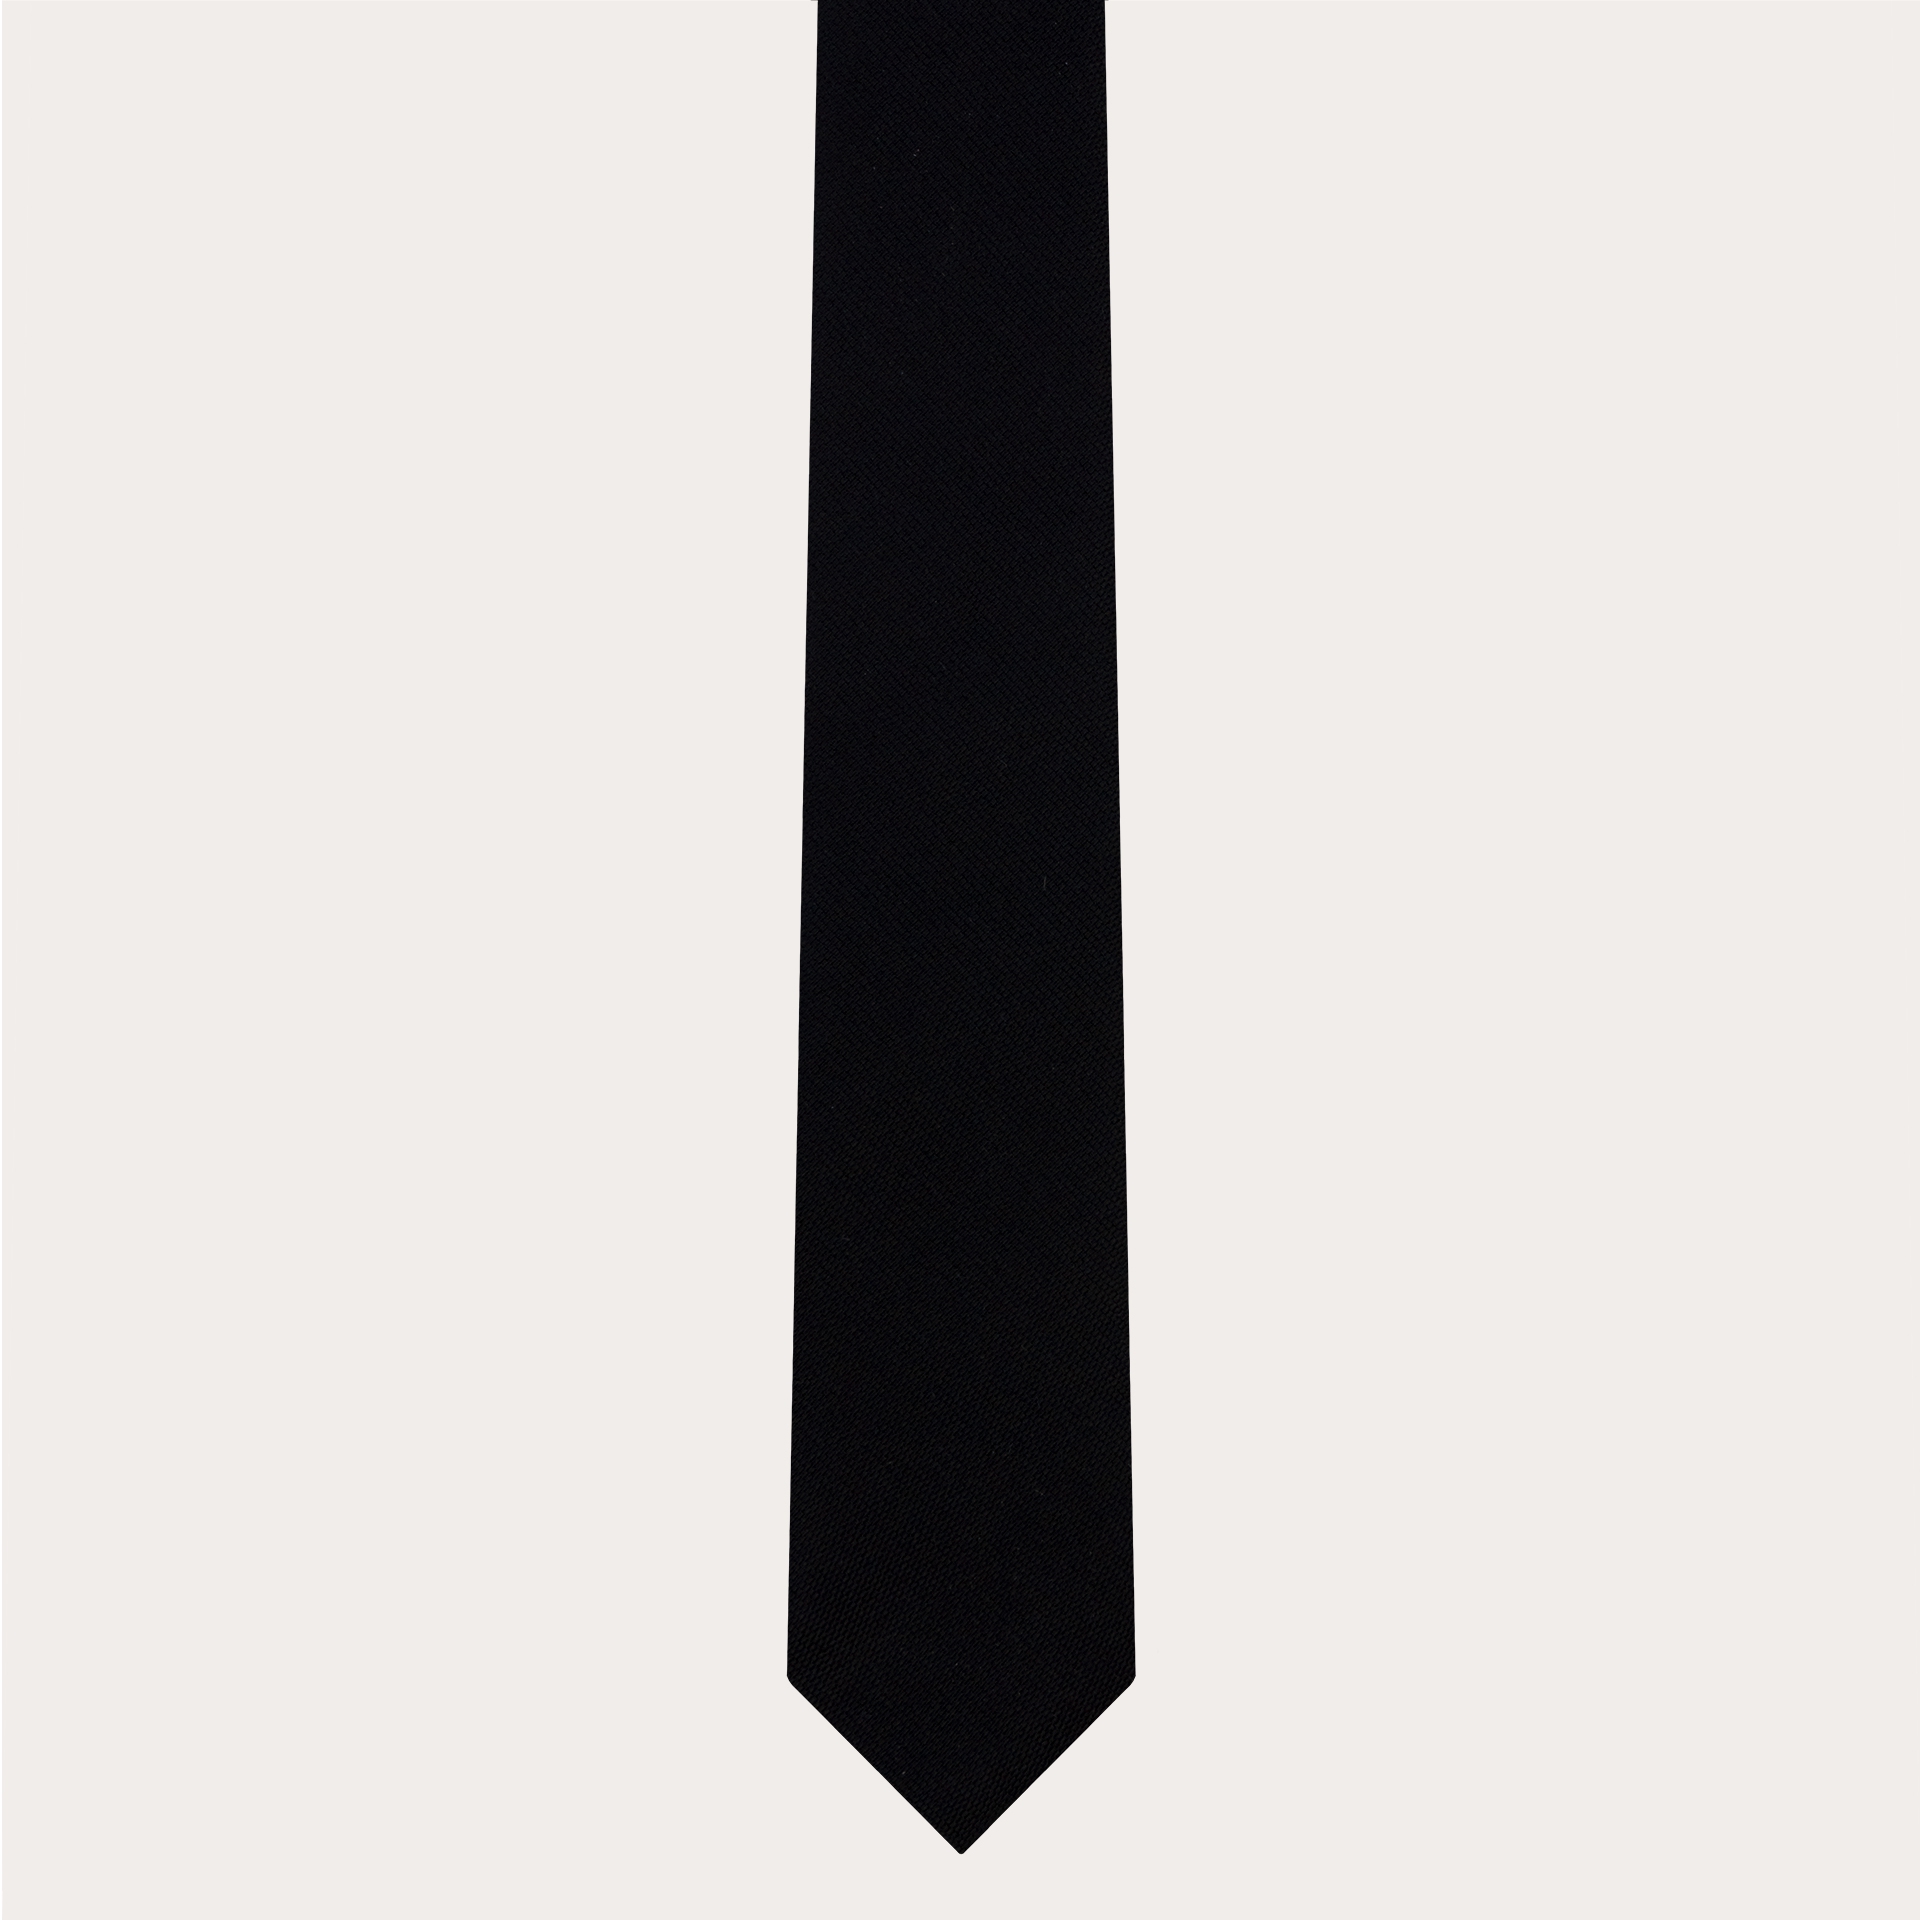 Cravatta sottile classica in pura seta, nero